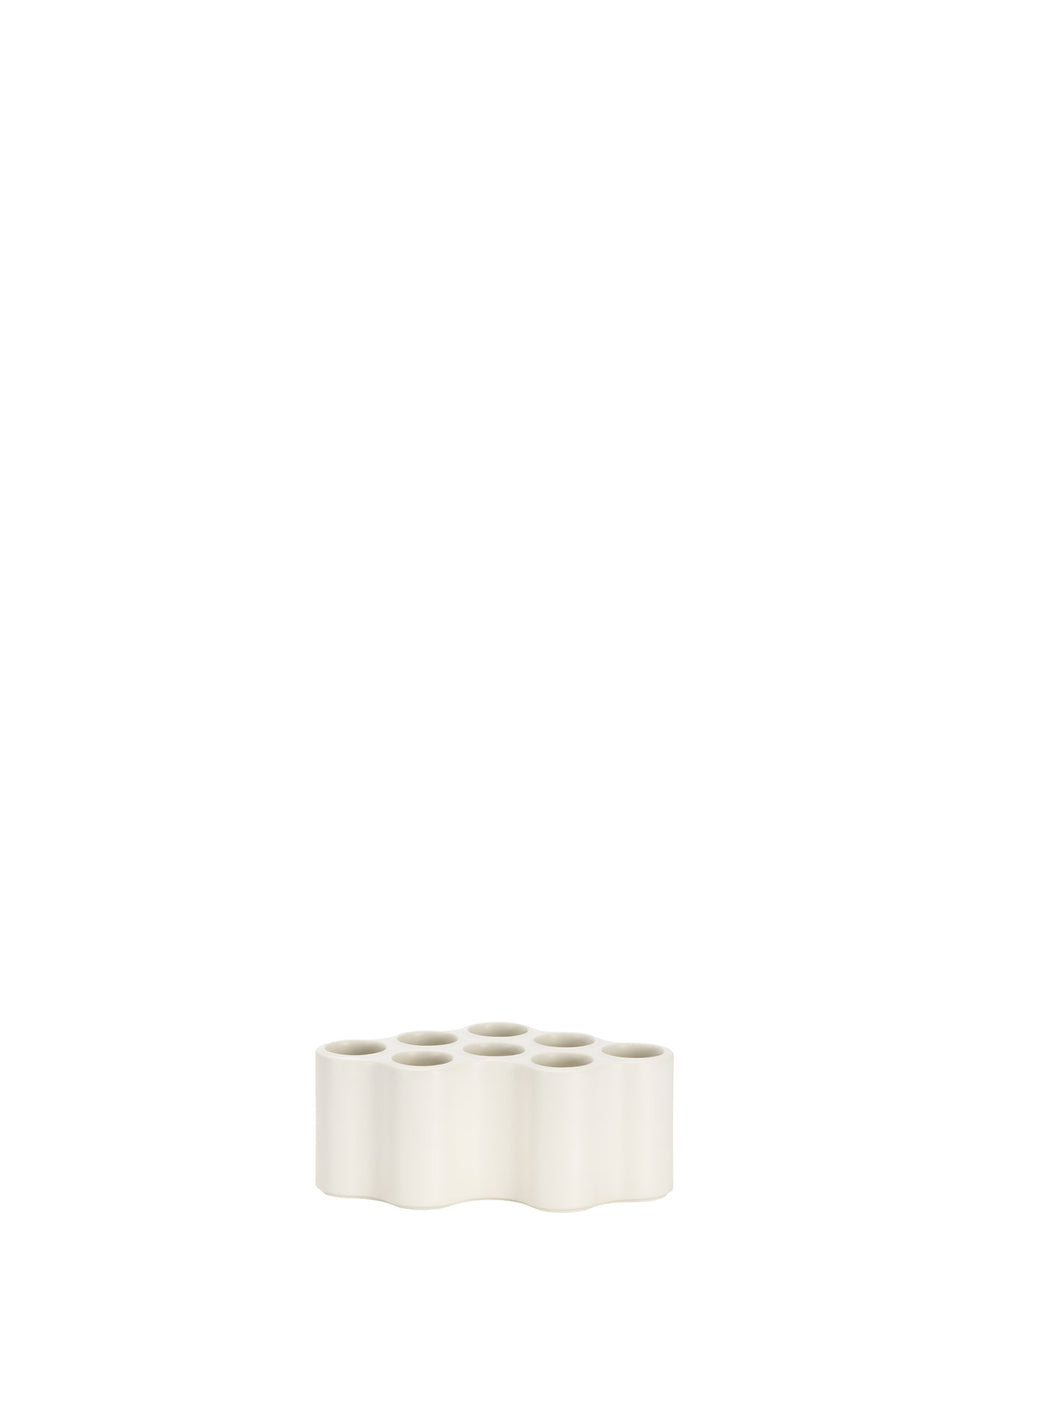 VITRA / Nuage Vases - Mat Ceramic White - 3 Sizes